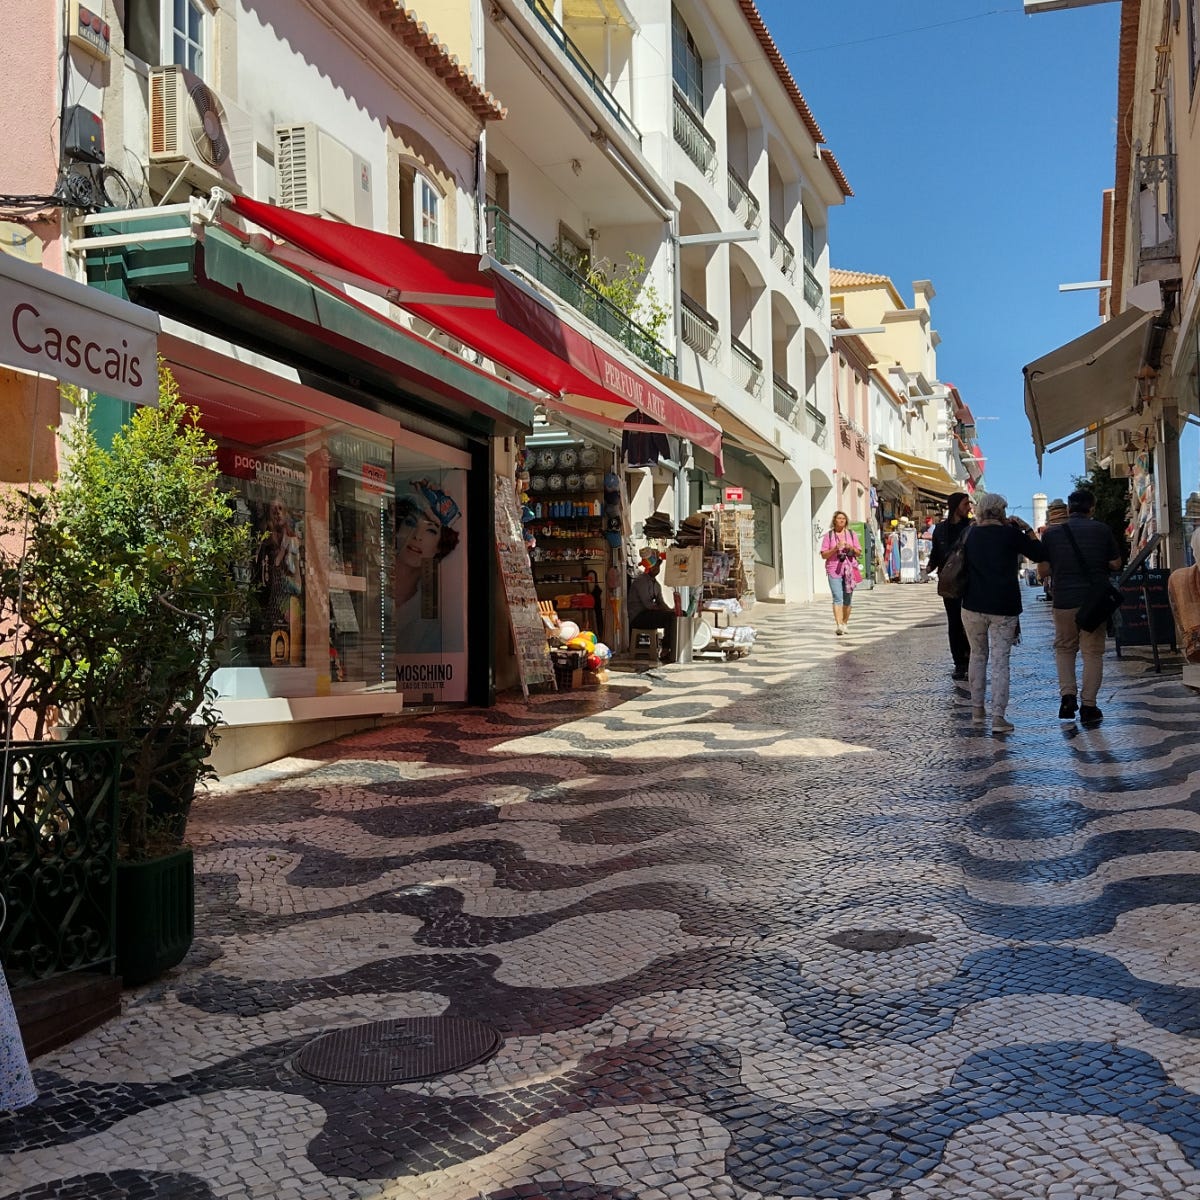 Shops along a street in Cascais Portugal